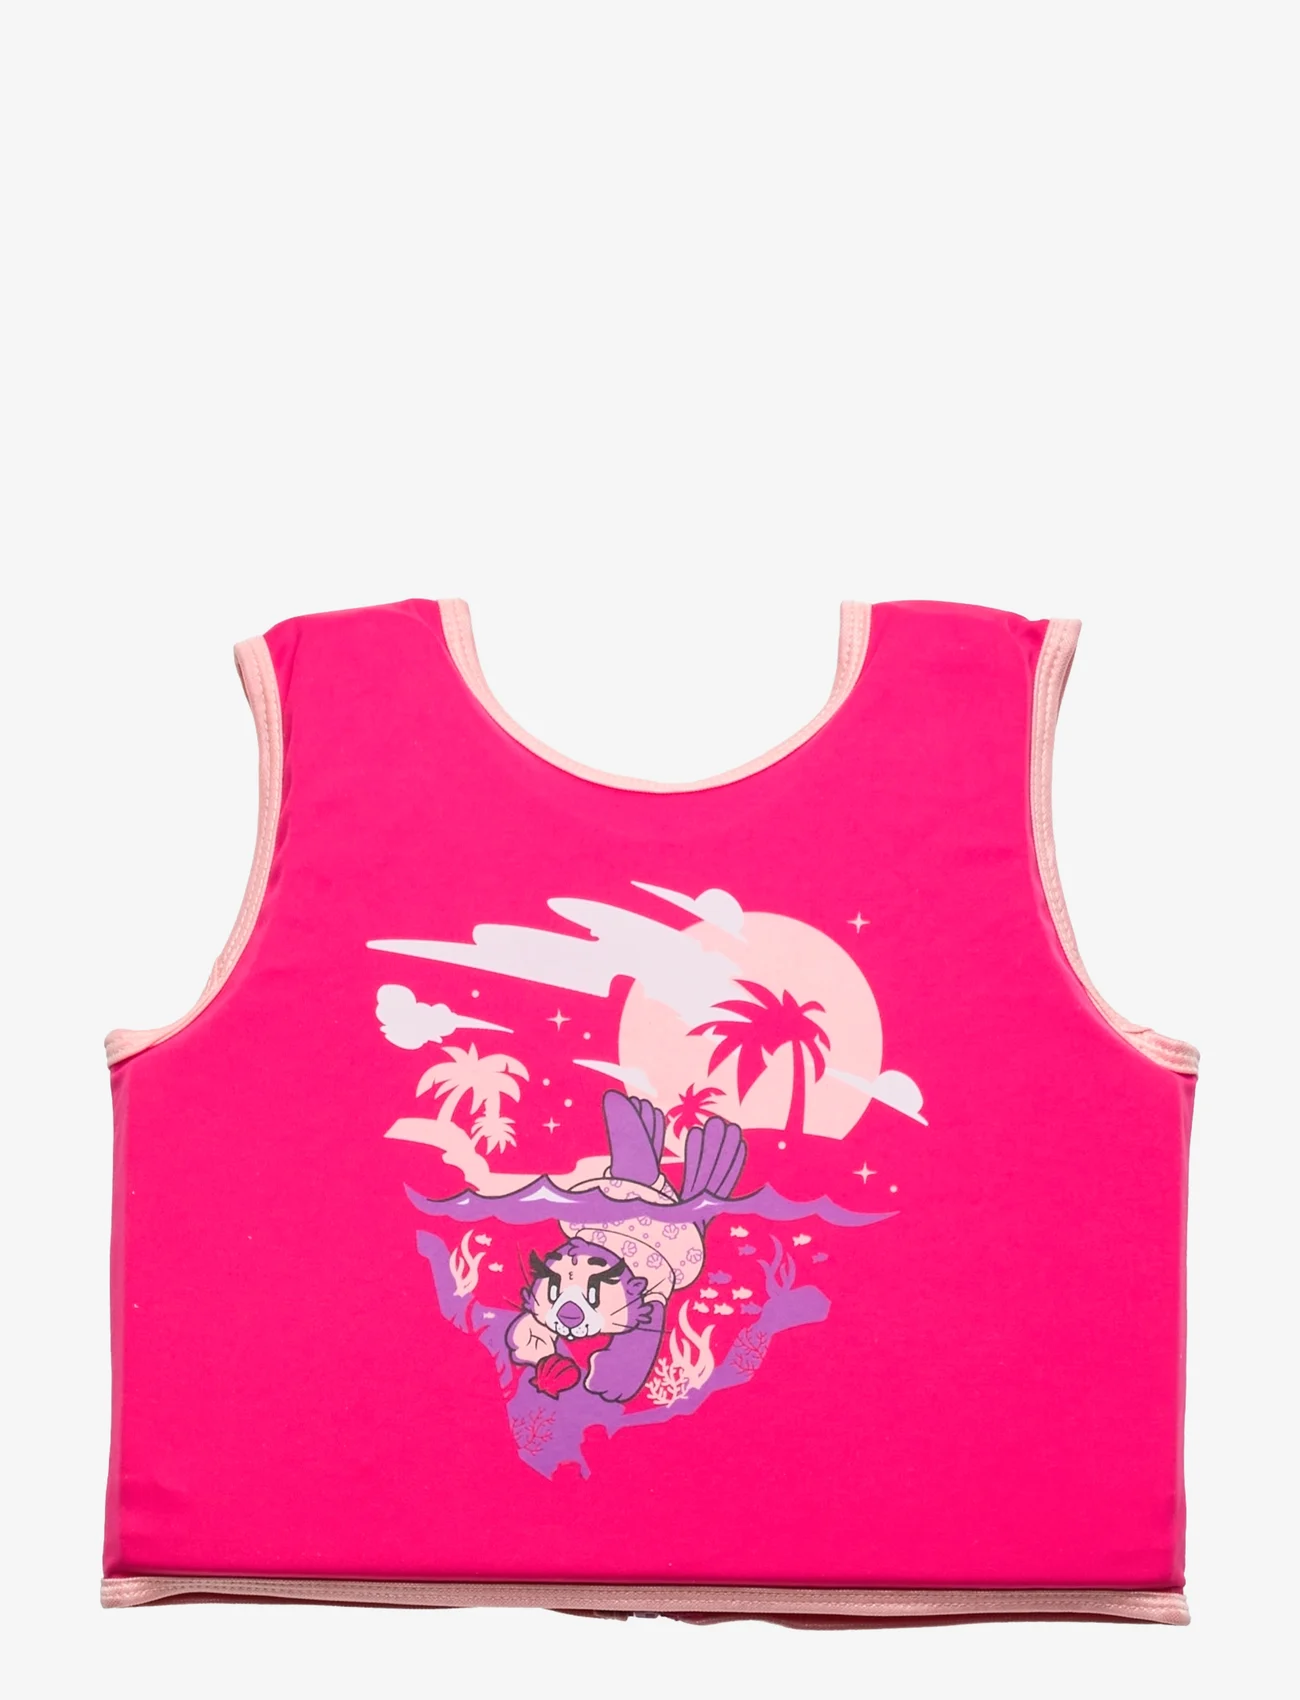 Speedo - Character Printed Float Vest - swimming accessories - pink/purple - 1